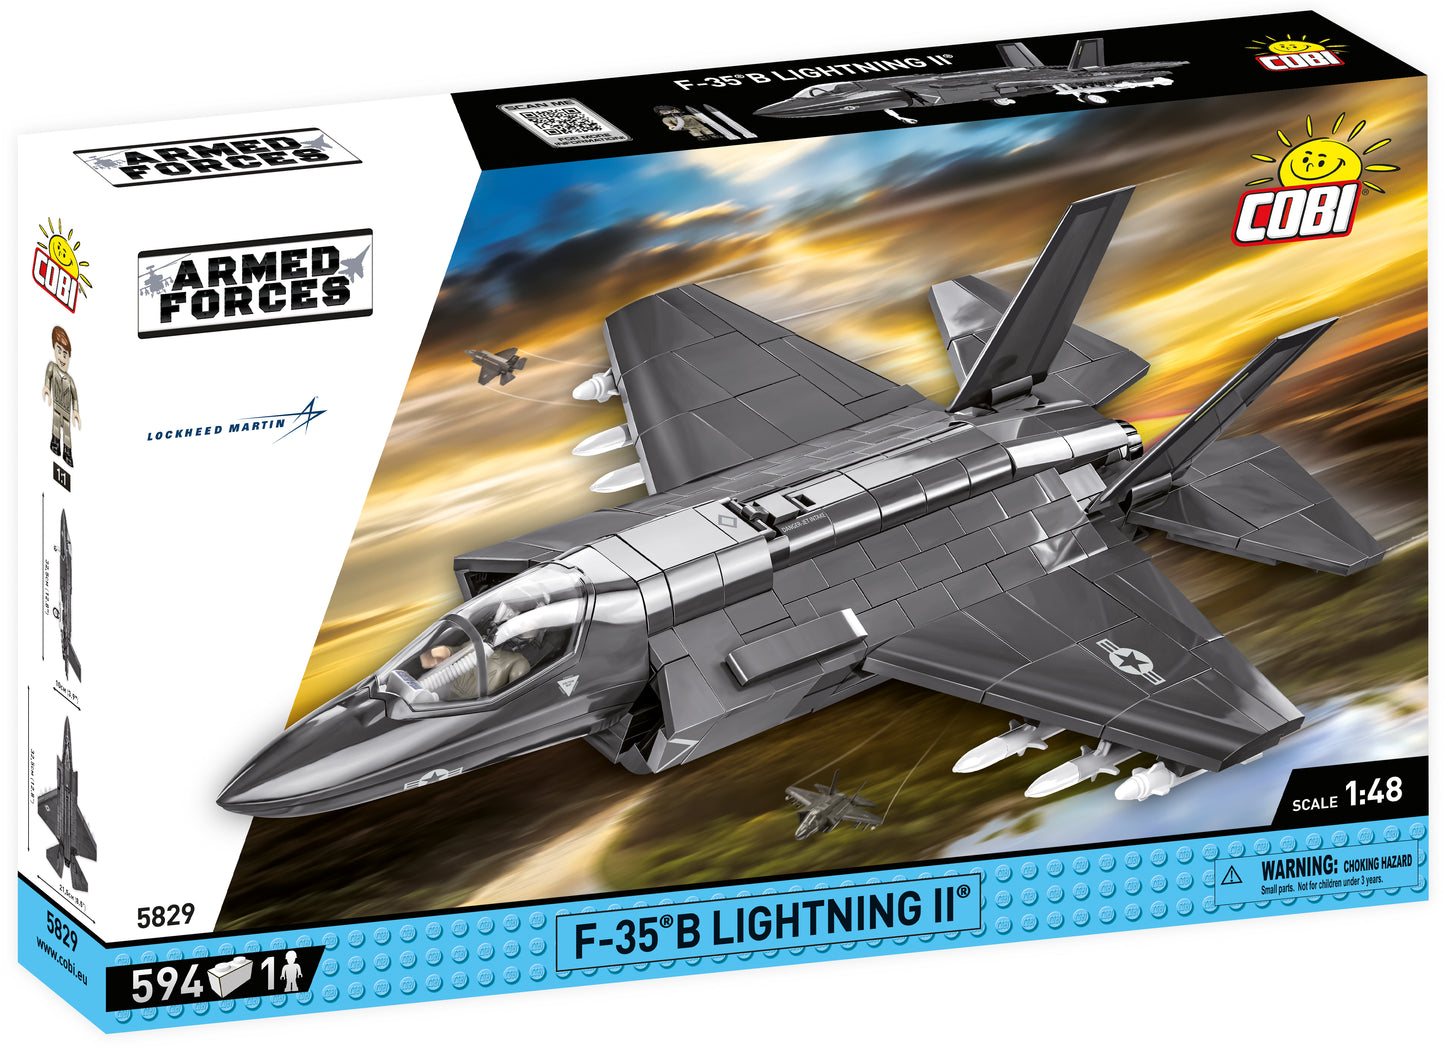 COBI Armed Forces F-35®B LIGHTNING II® Jet Plane